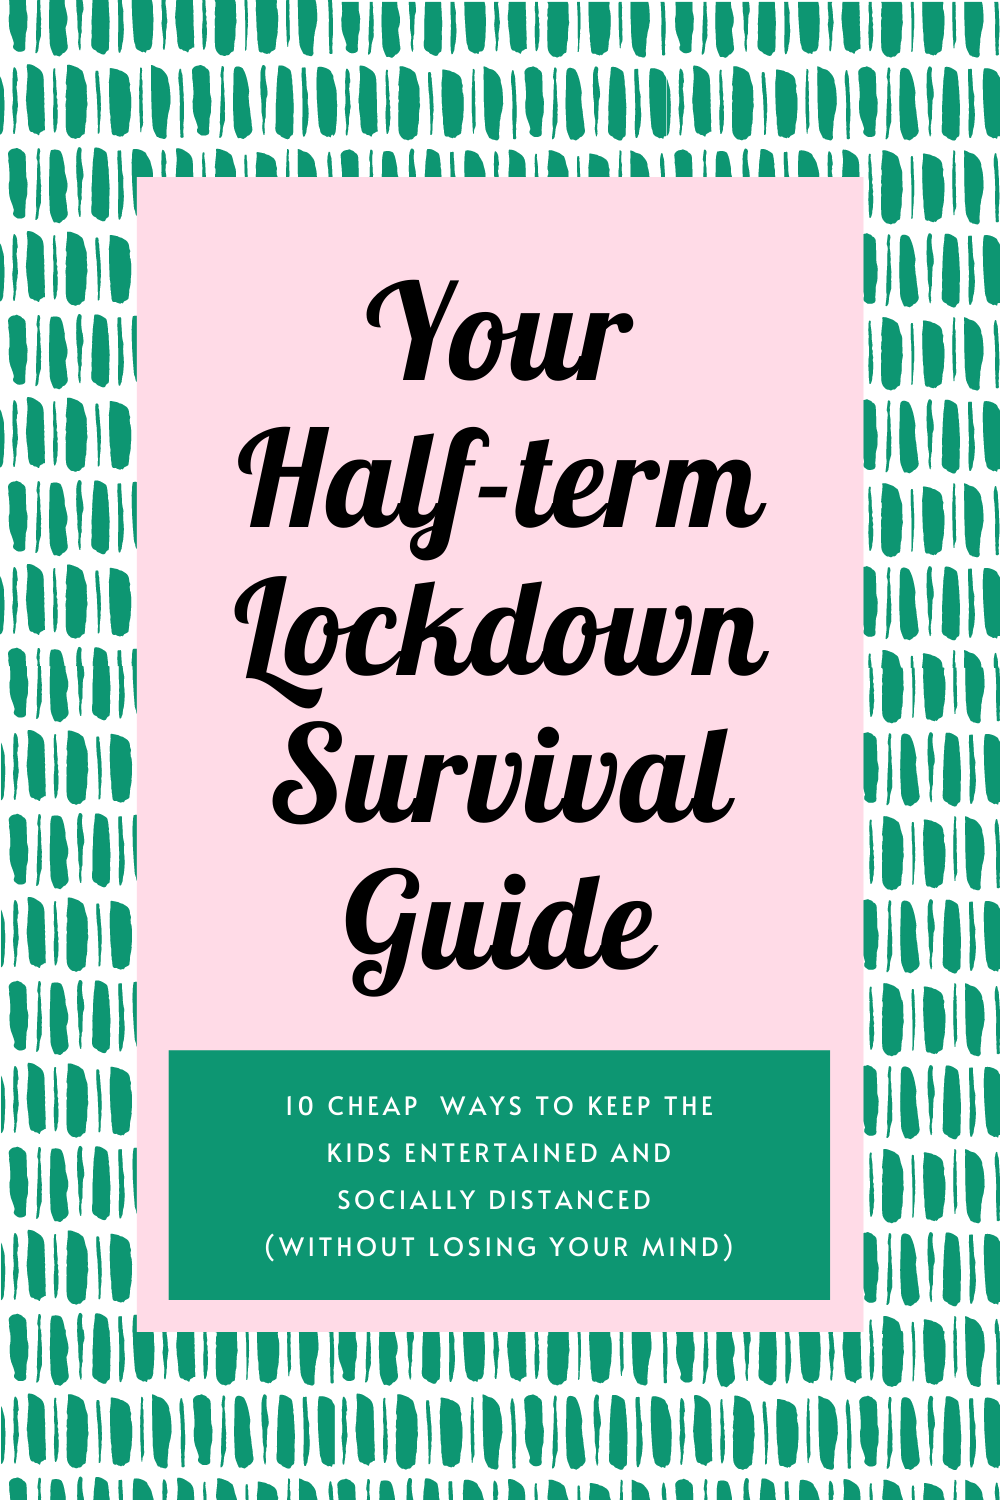 Your half-term lockdown survival guide